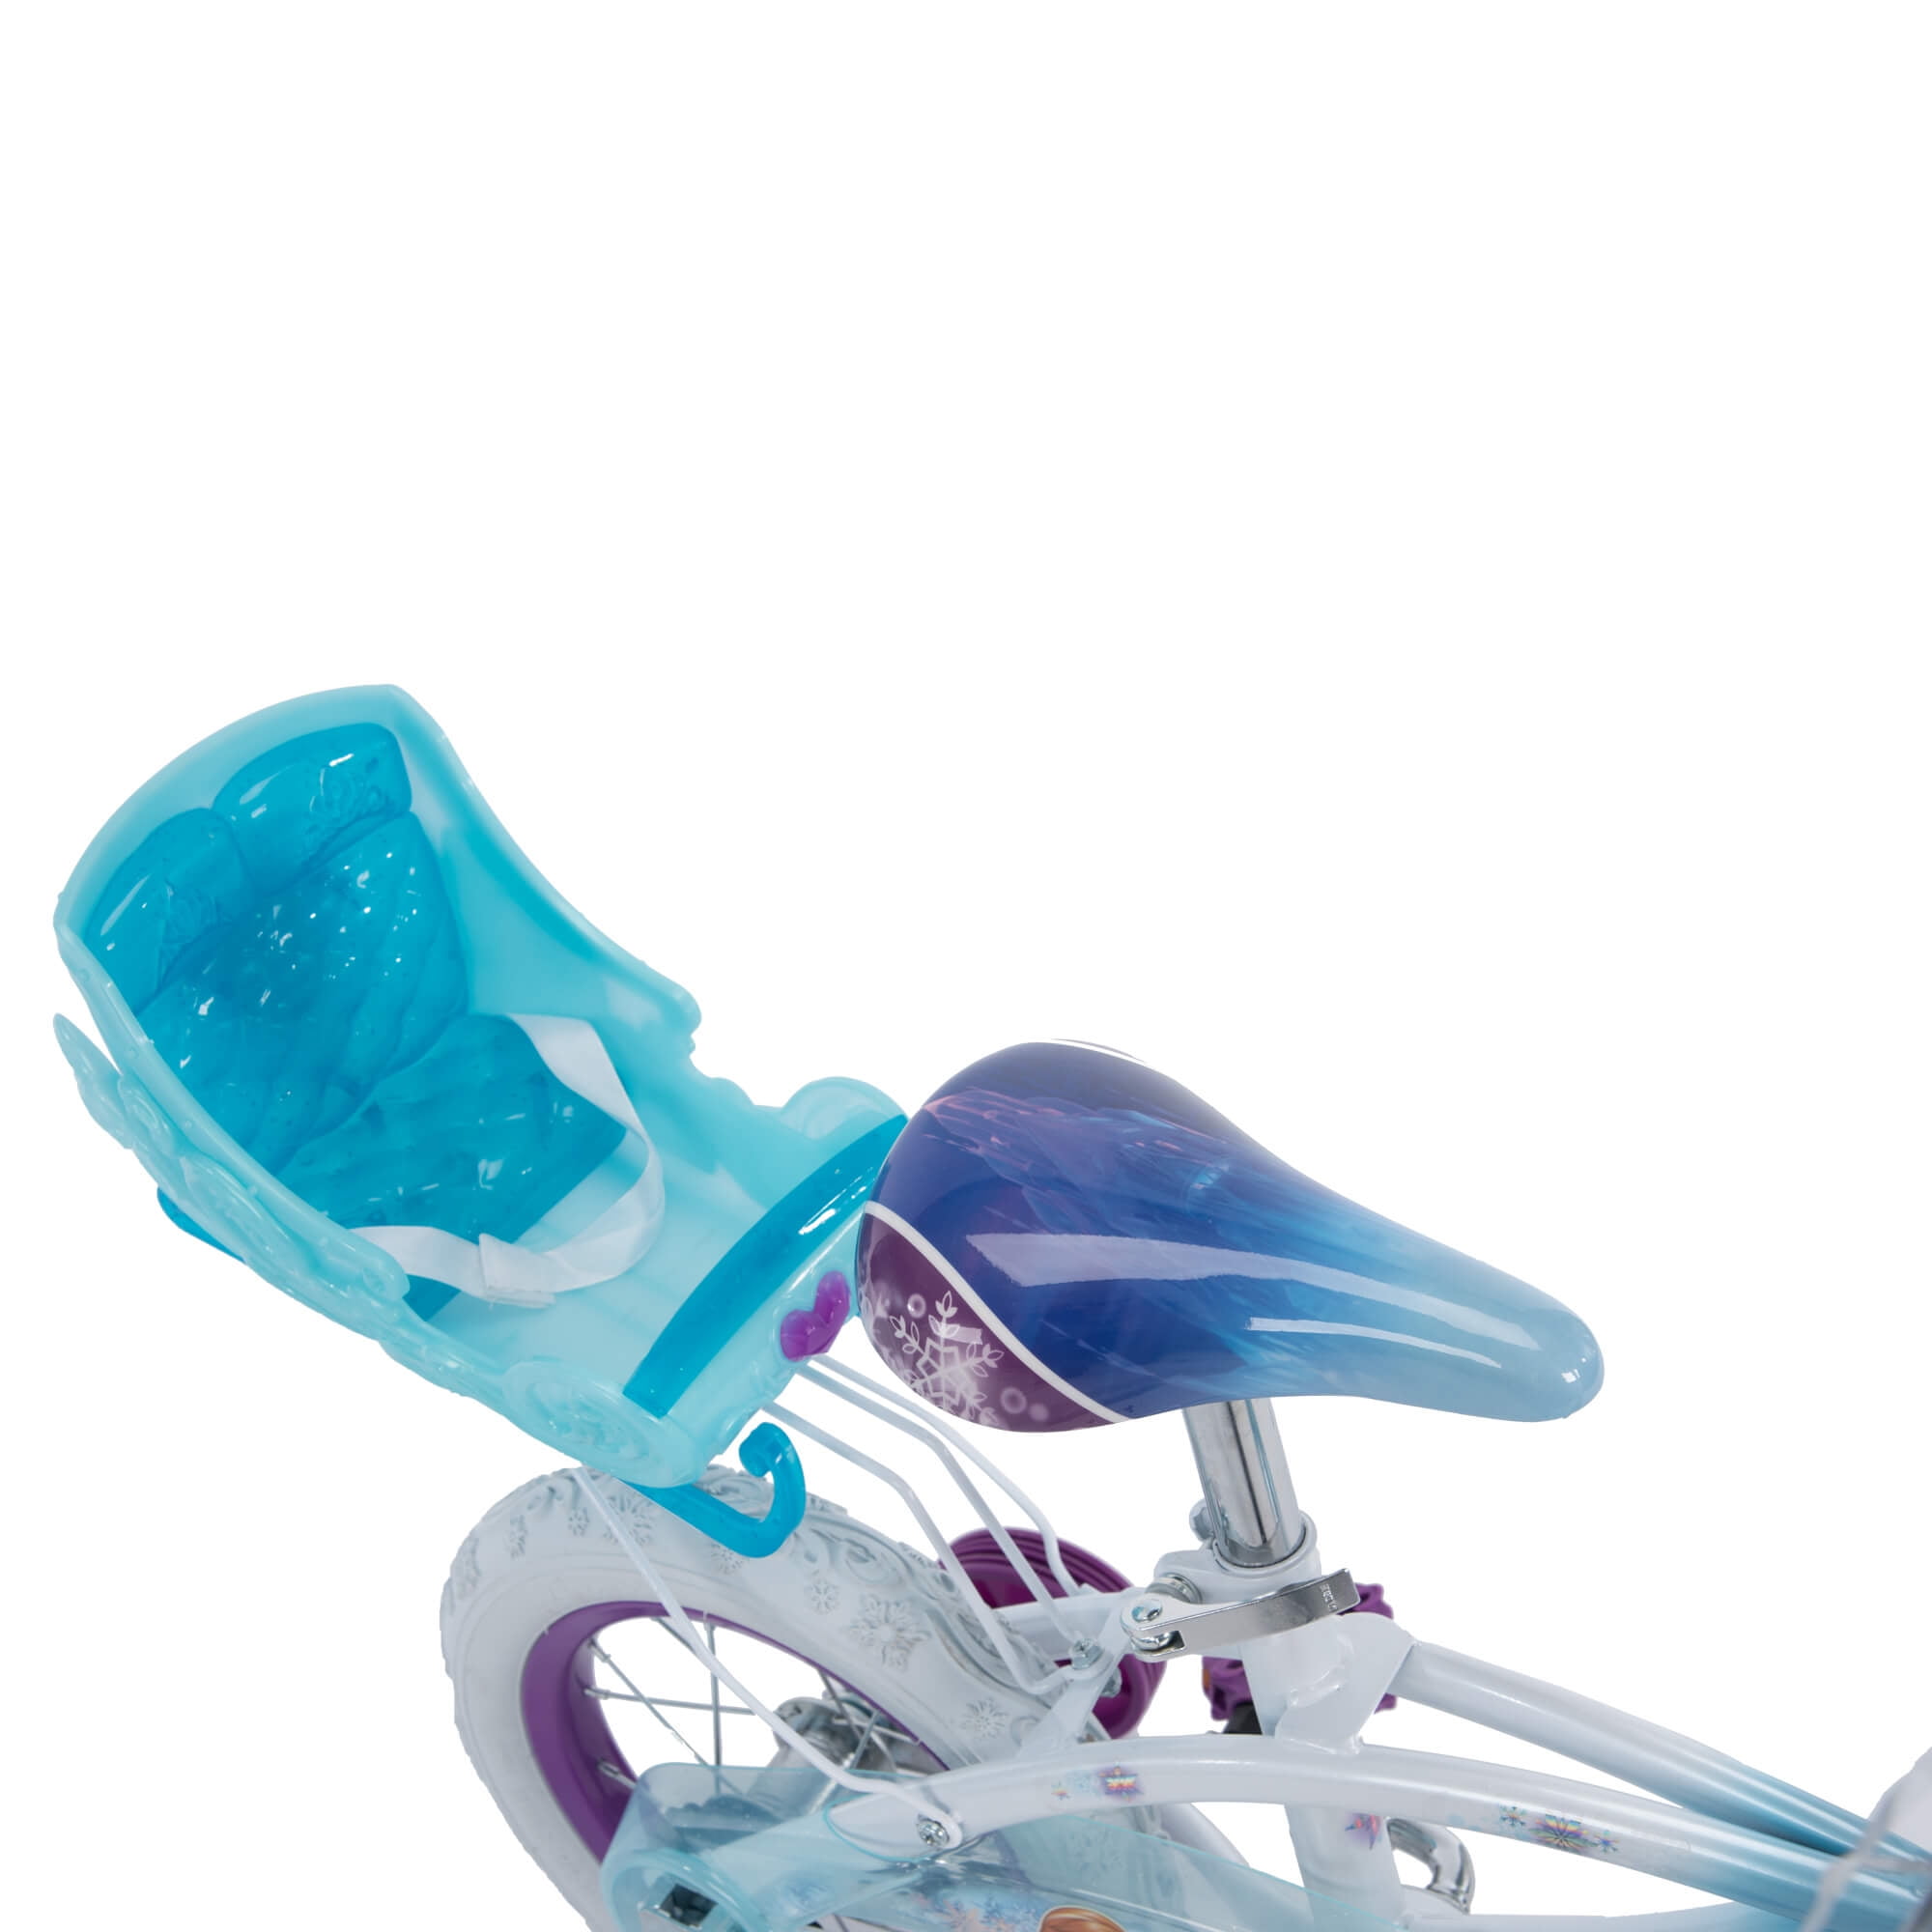 Huffy Disney Frozen 16 inch EZ Build Girls Bike with Sleigh Doll Carrier Blue/White for sale online 